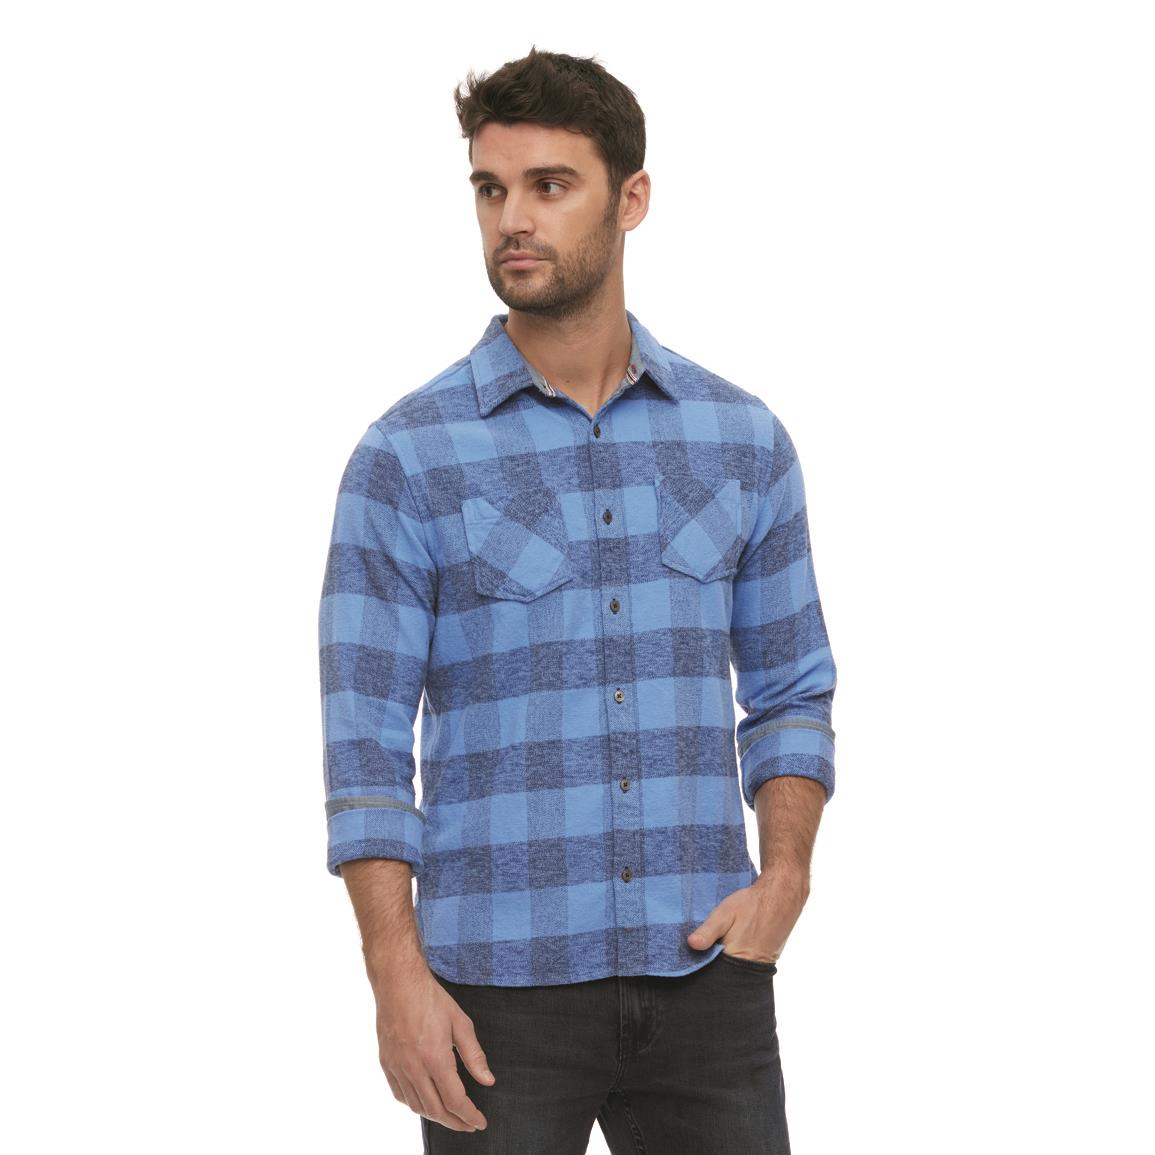 Flag & Anthem Men's Harrells Flannel Shirt, Navy/blue